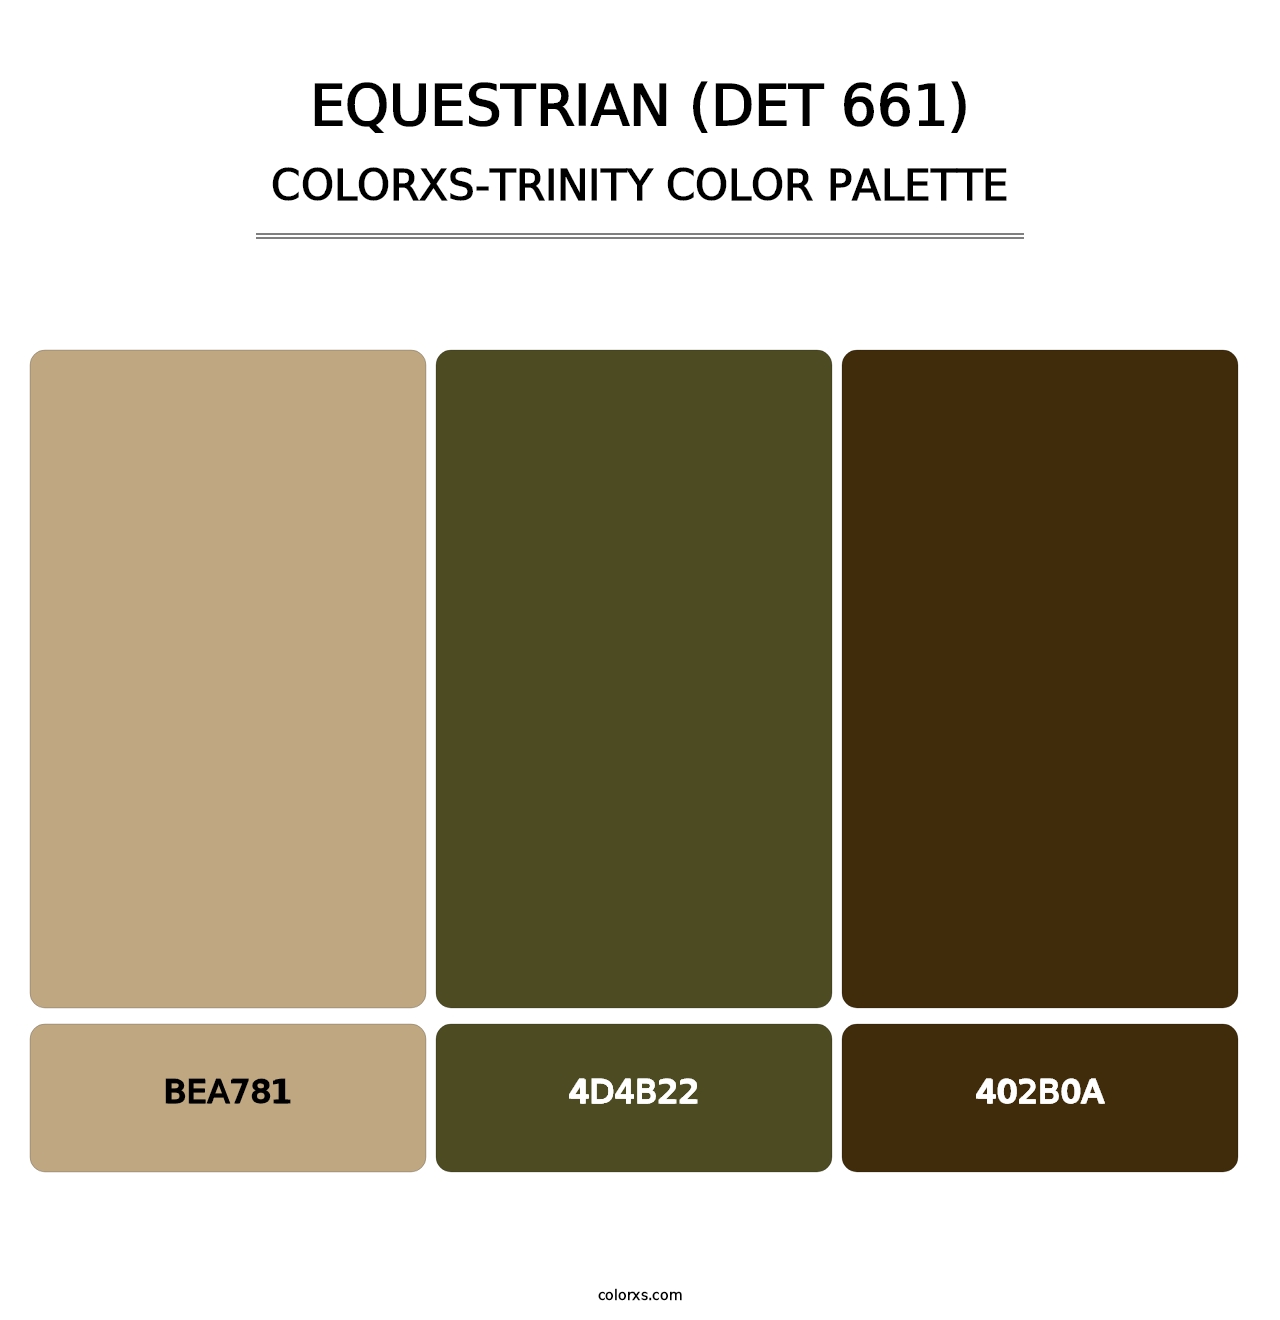 Equestrian (DET 661) - Colorxs Trinity Palette